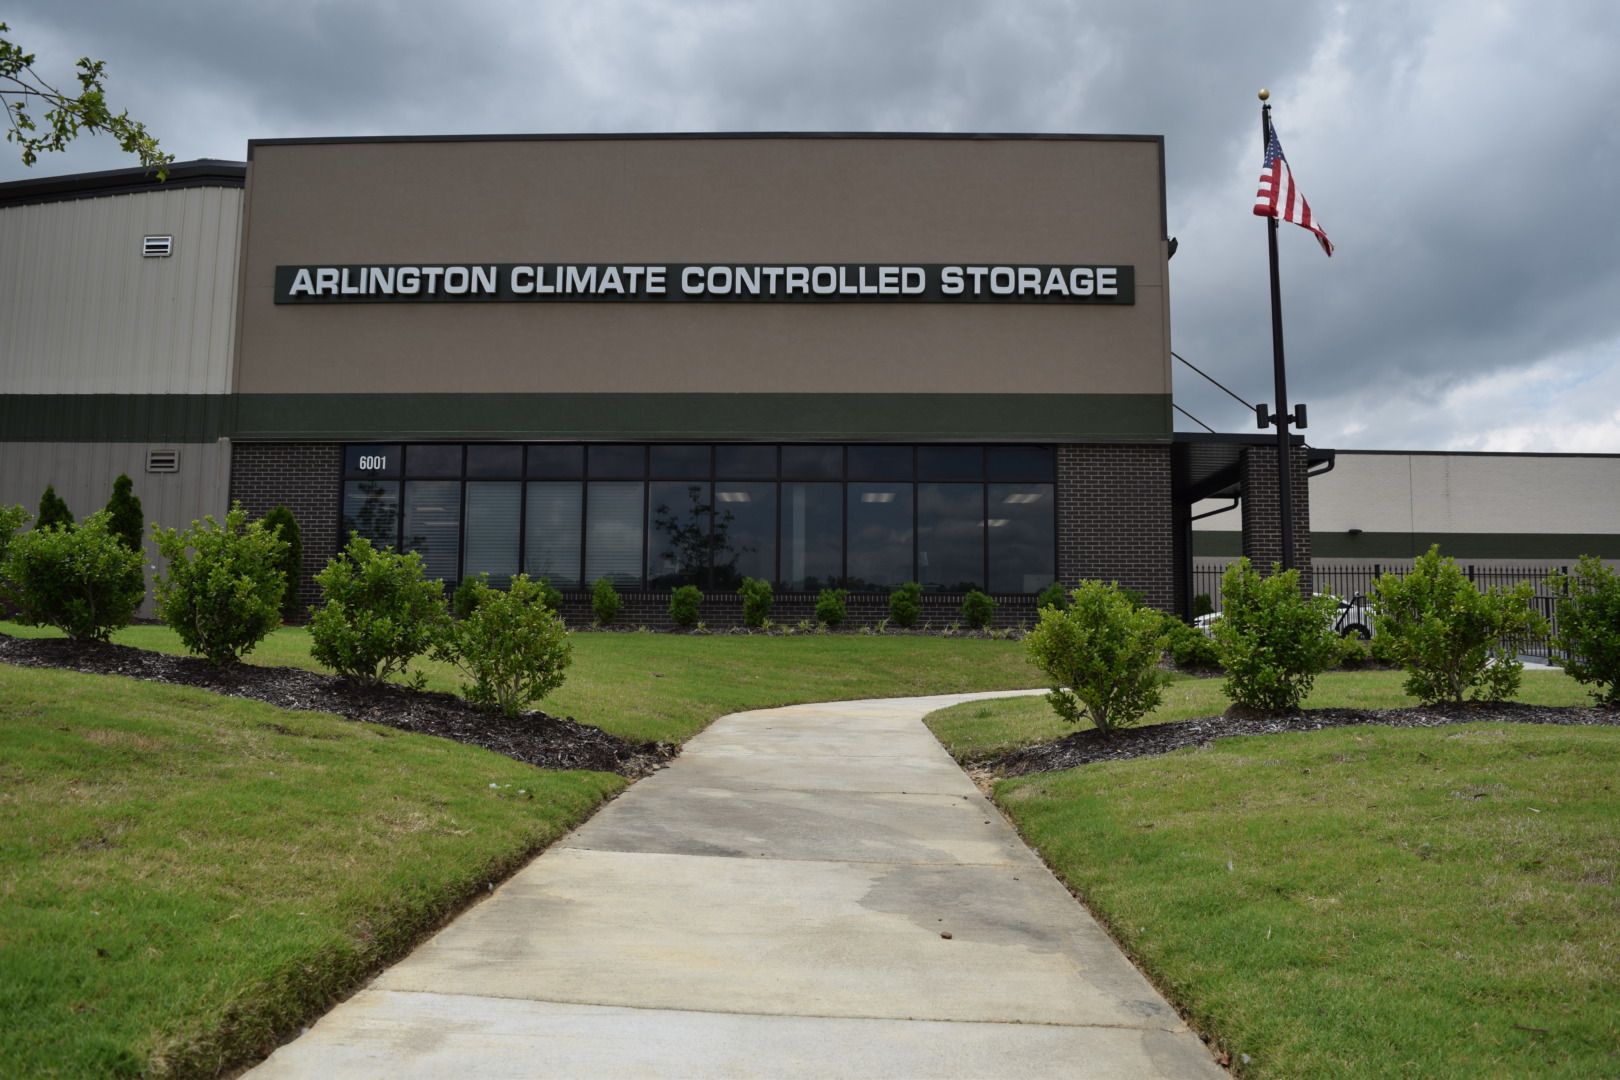 Arlington Climate Controlled Storage exterior